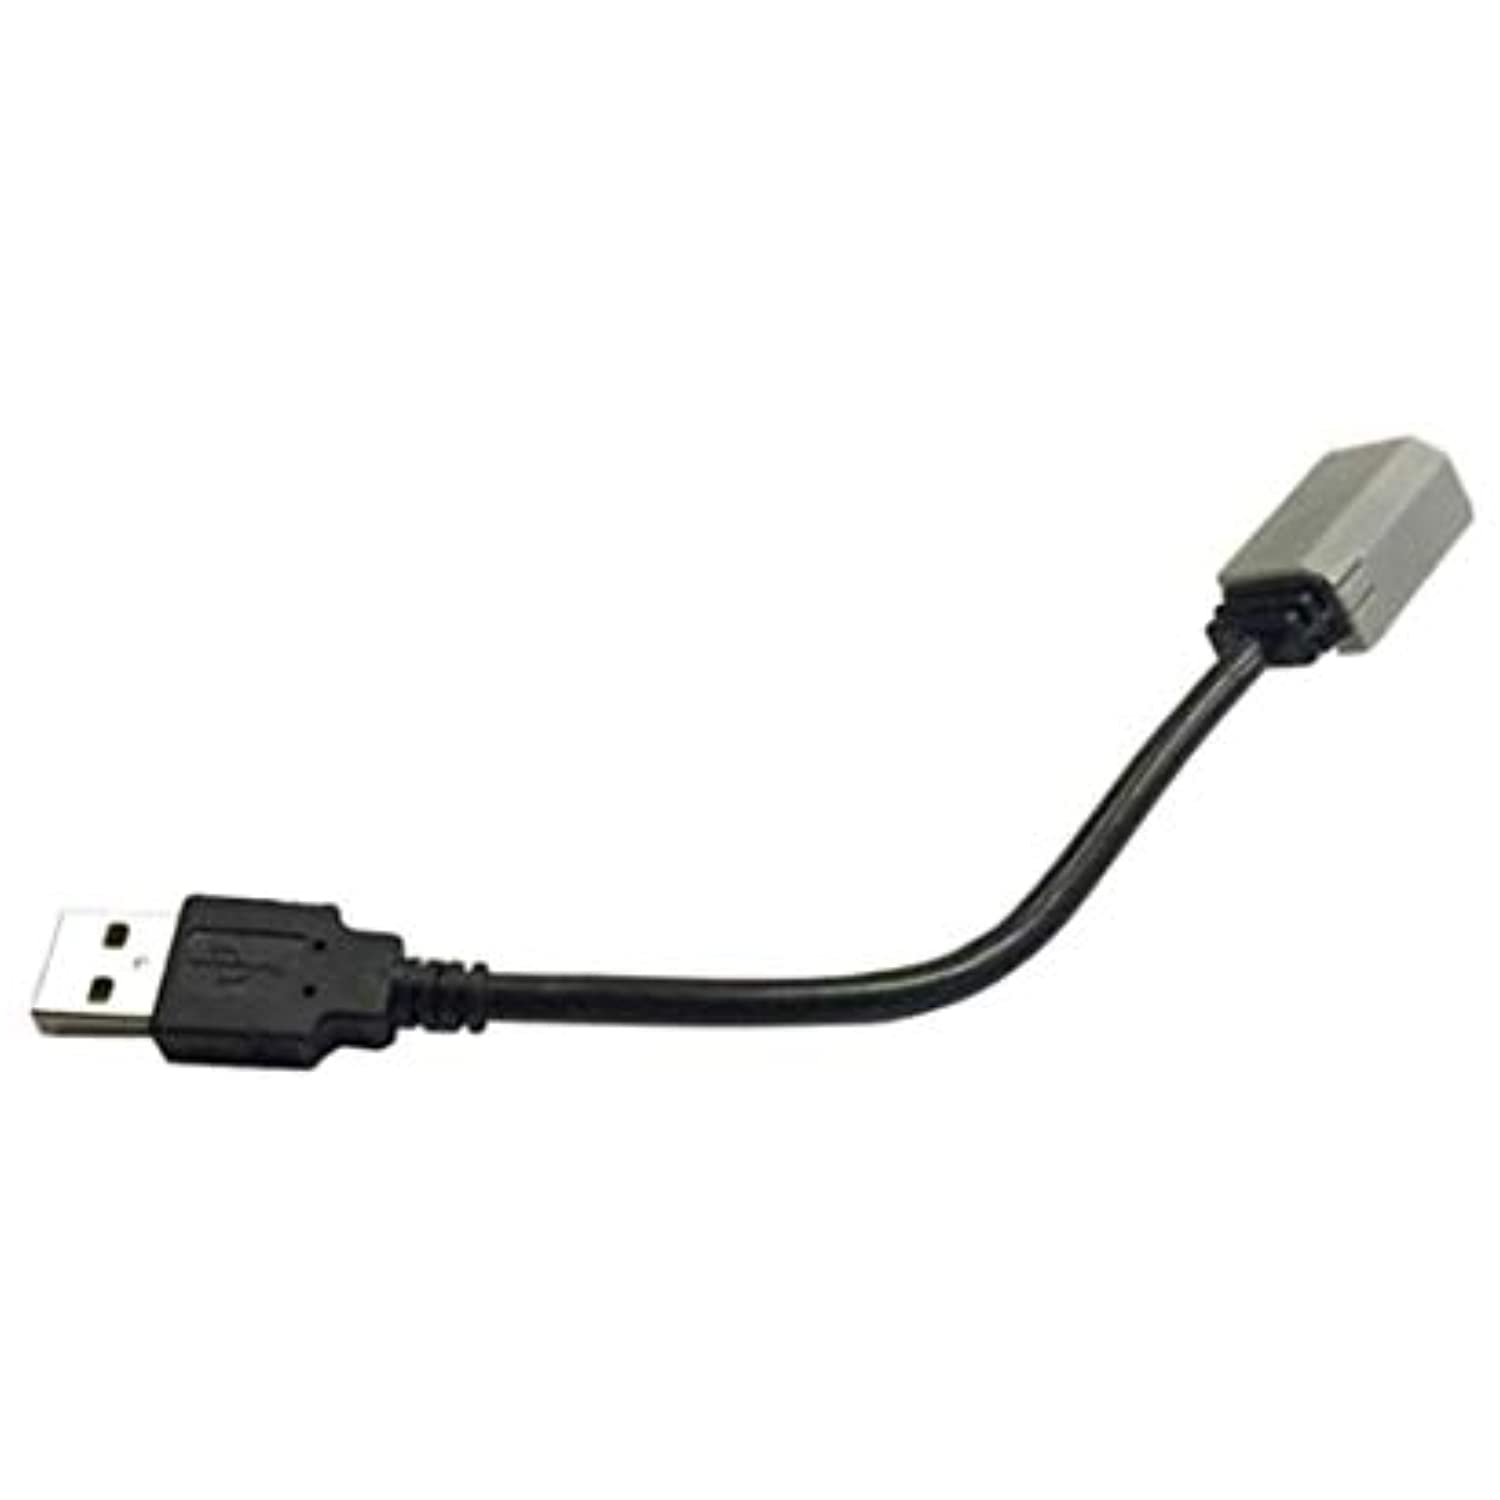 Maestro Acc-USB1 Unkeyed USB Mini Female to Full Size USB Male Adaptor